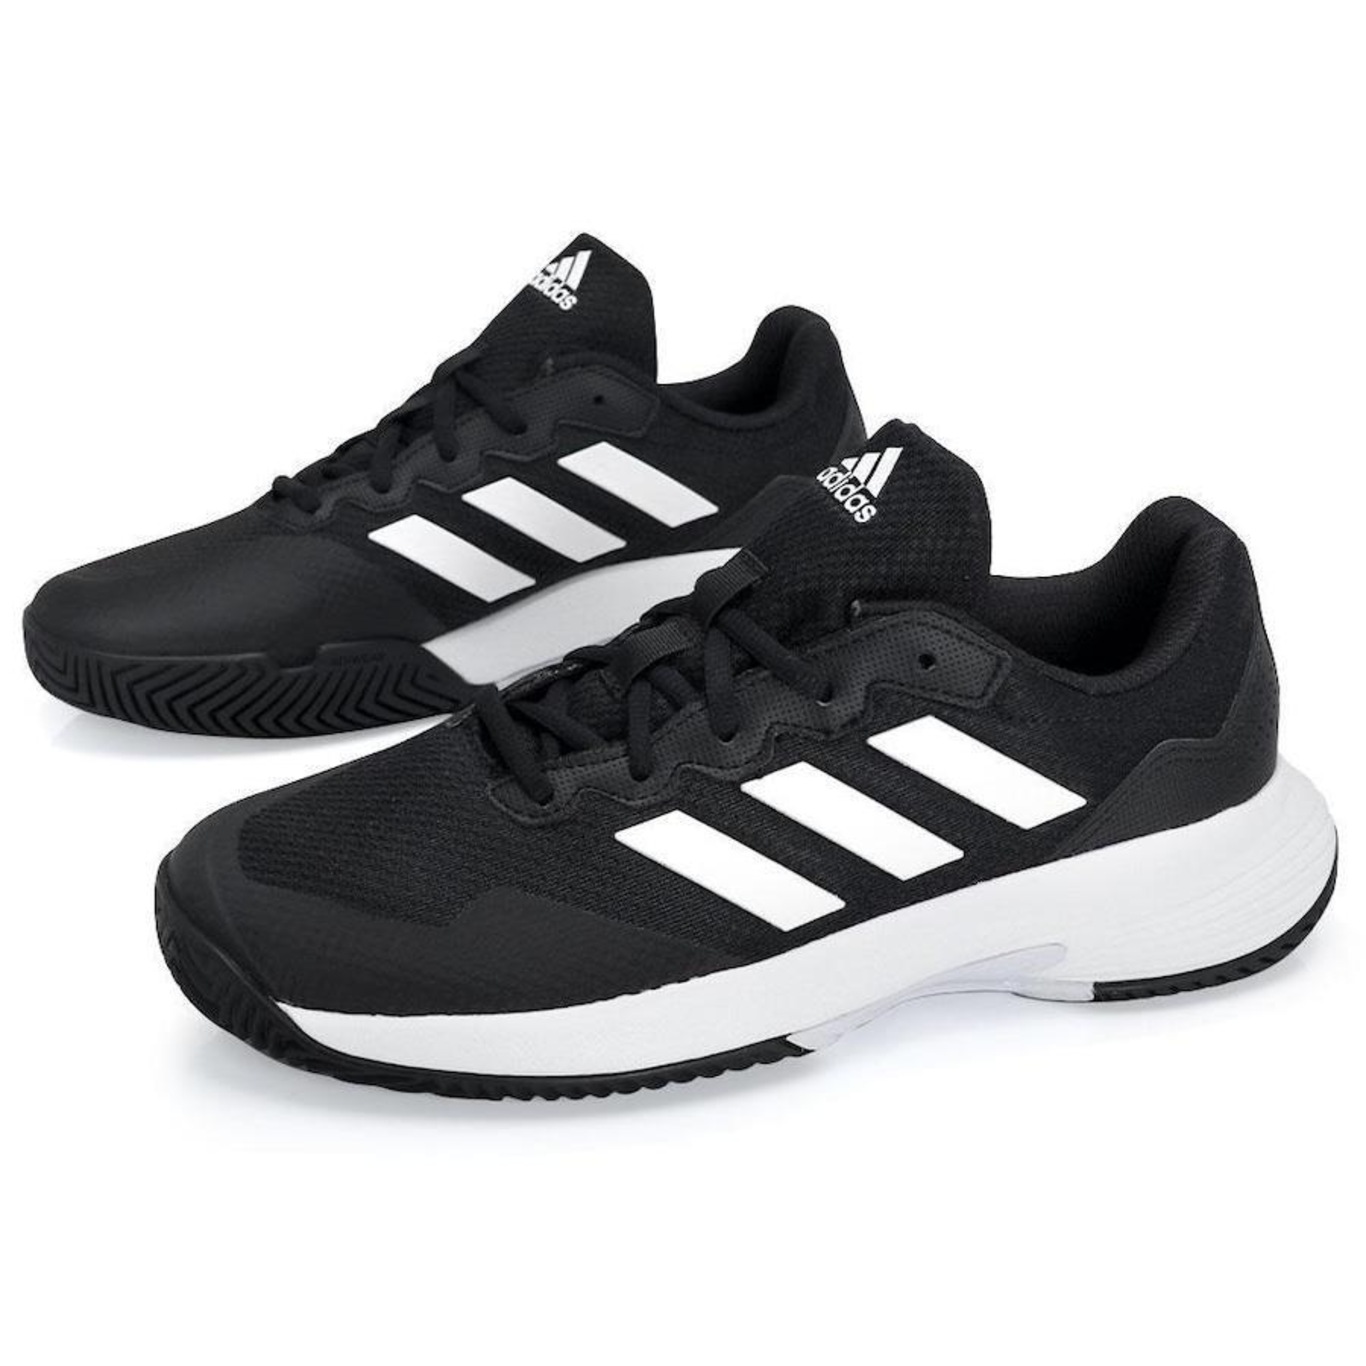 Tênis Adidas Gamecourt 2 M - Masculino - Preto+Branco - Tipos de